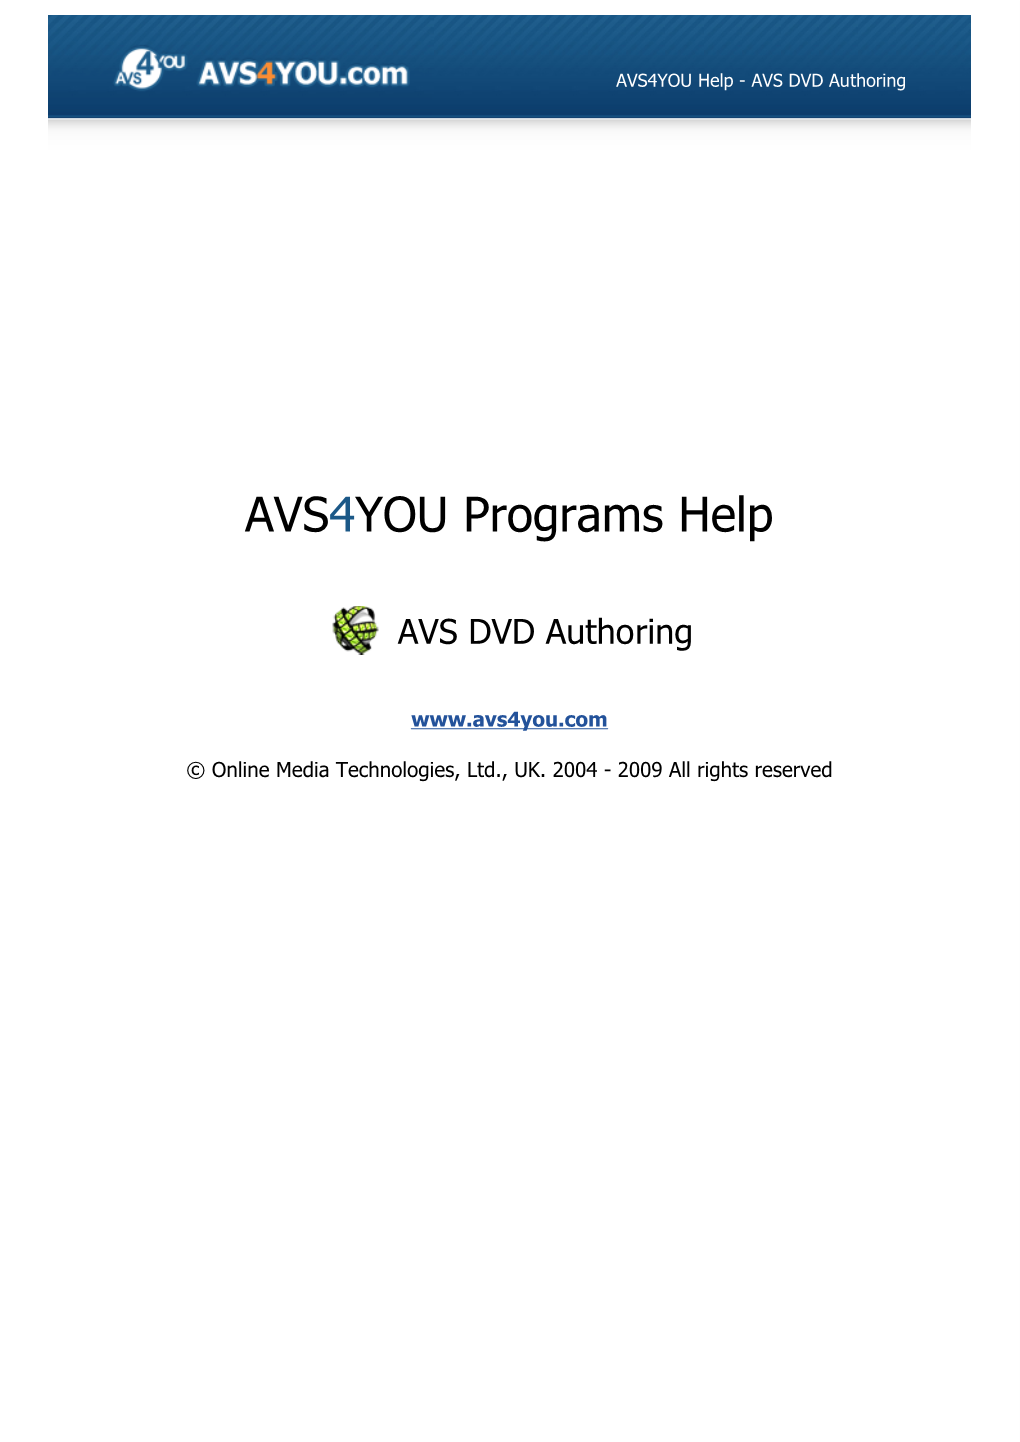 AVS DVD Authoring